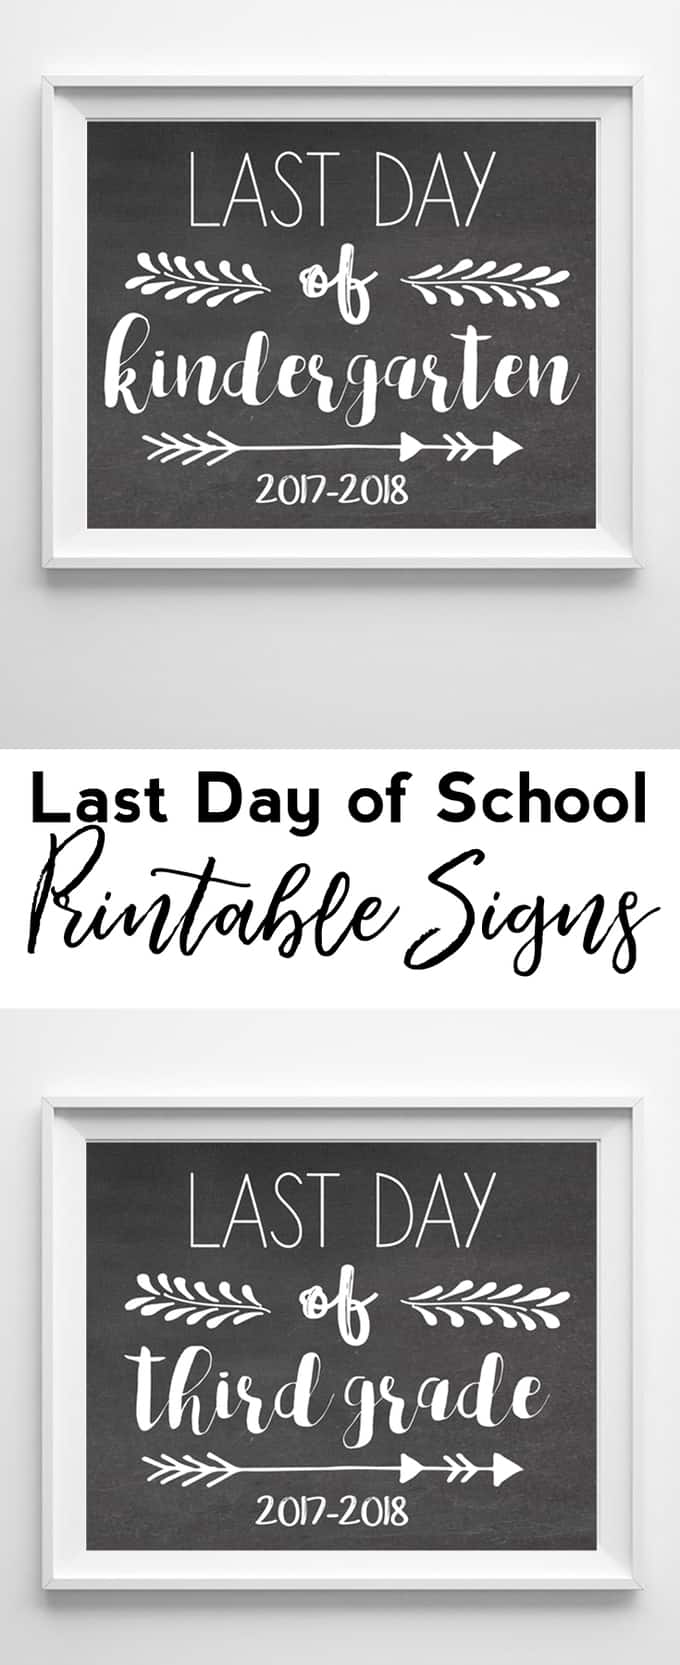 last-day-of-school-school-signs-printable-signs